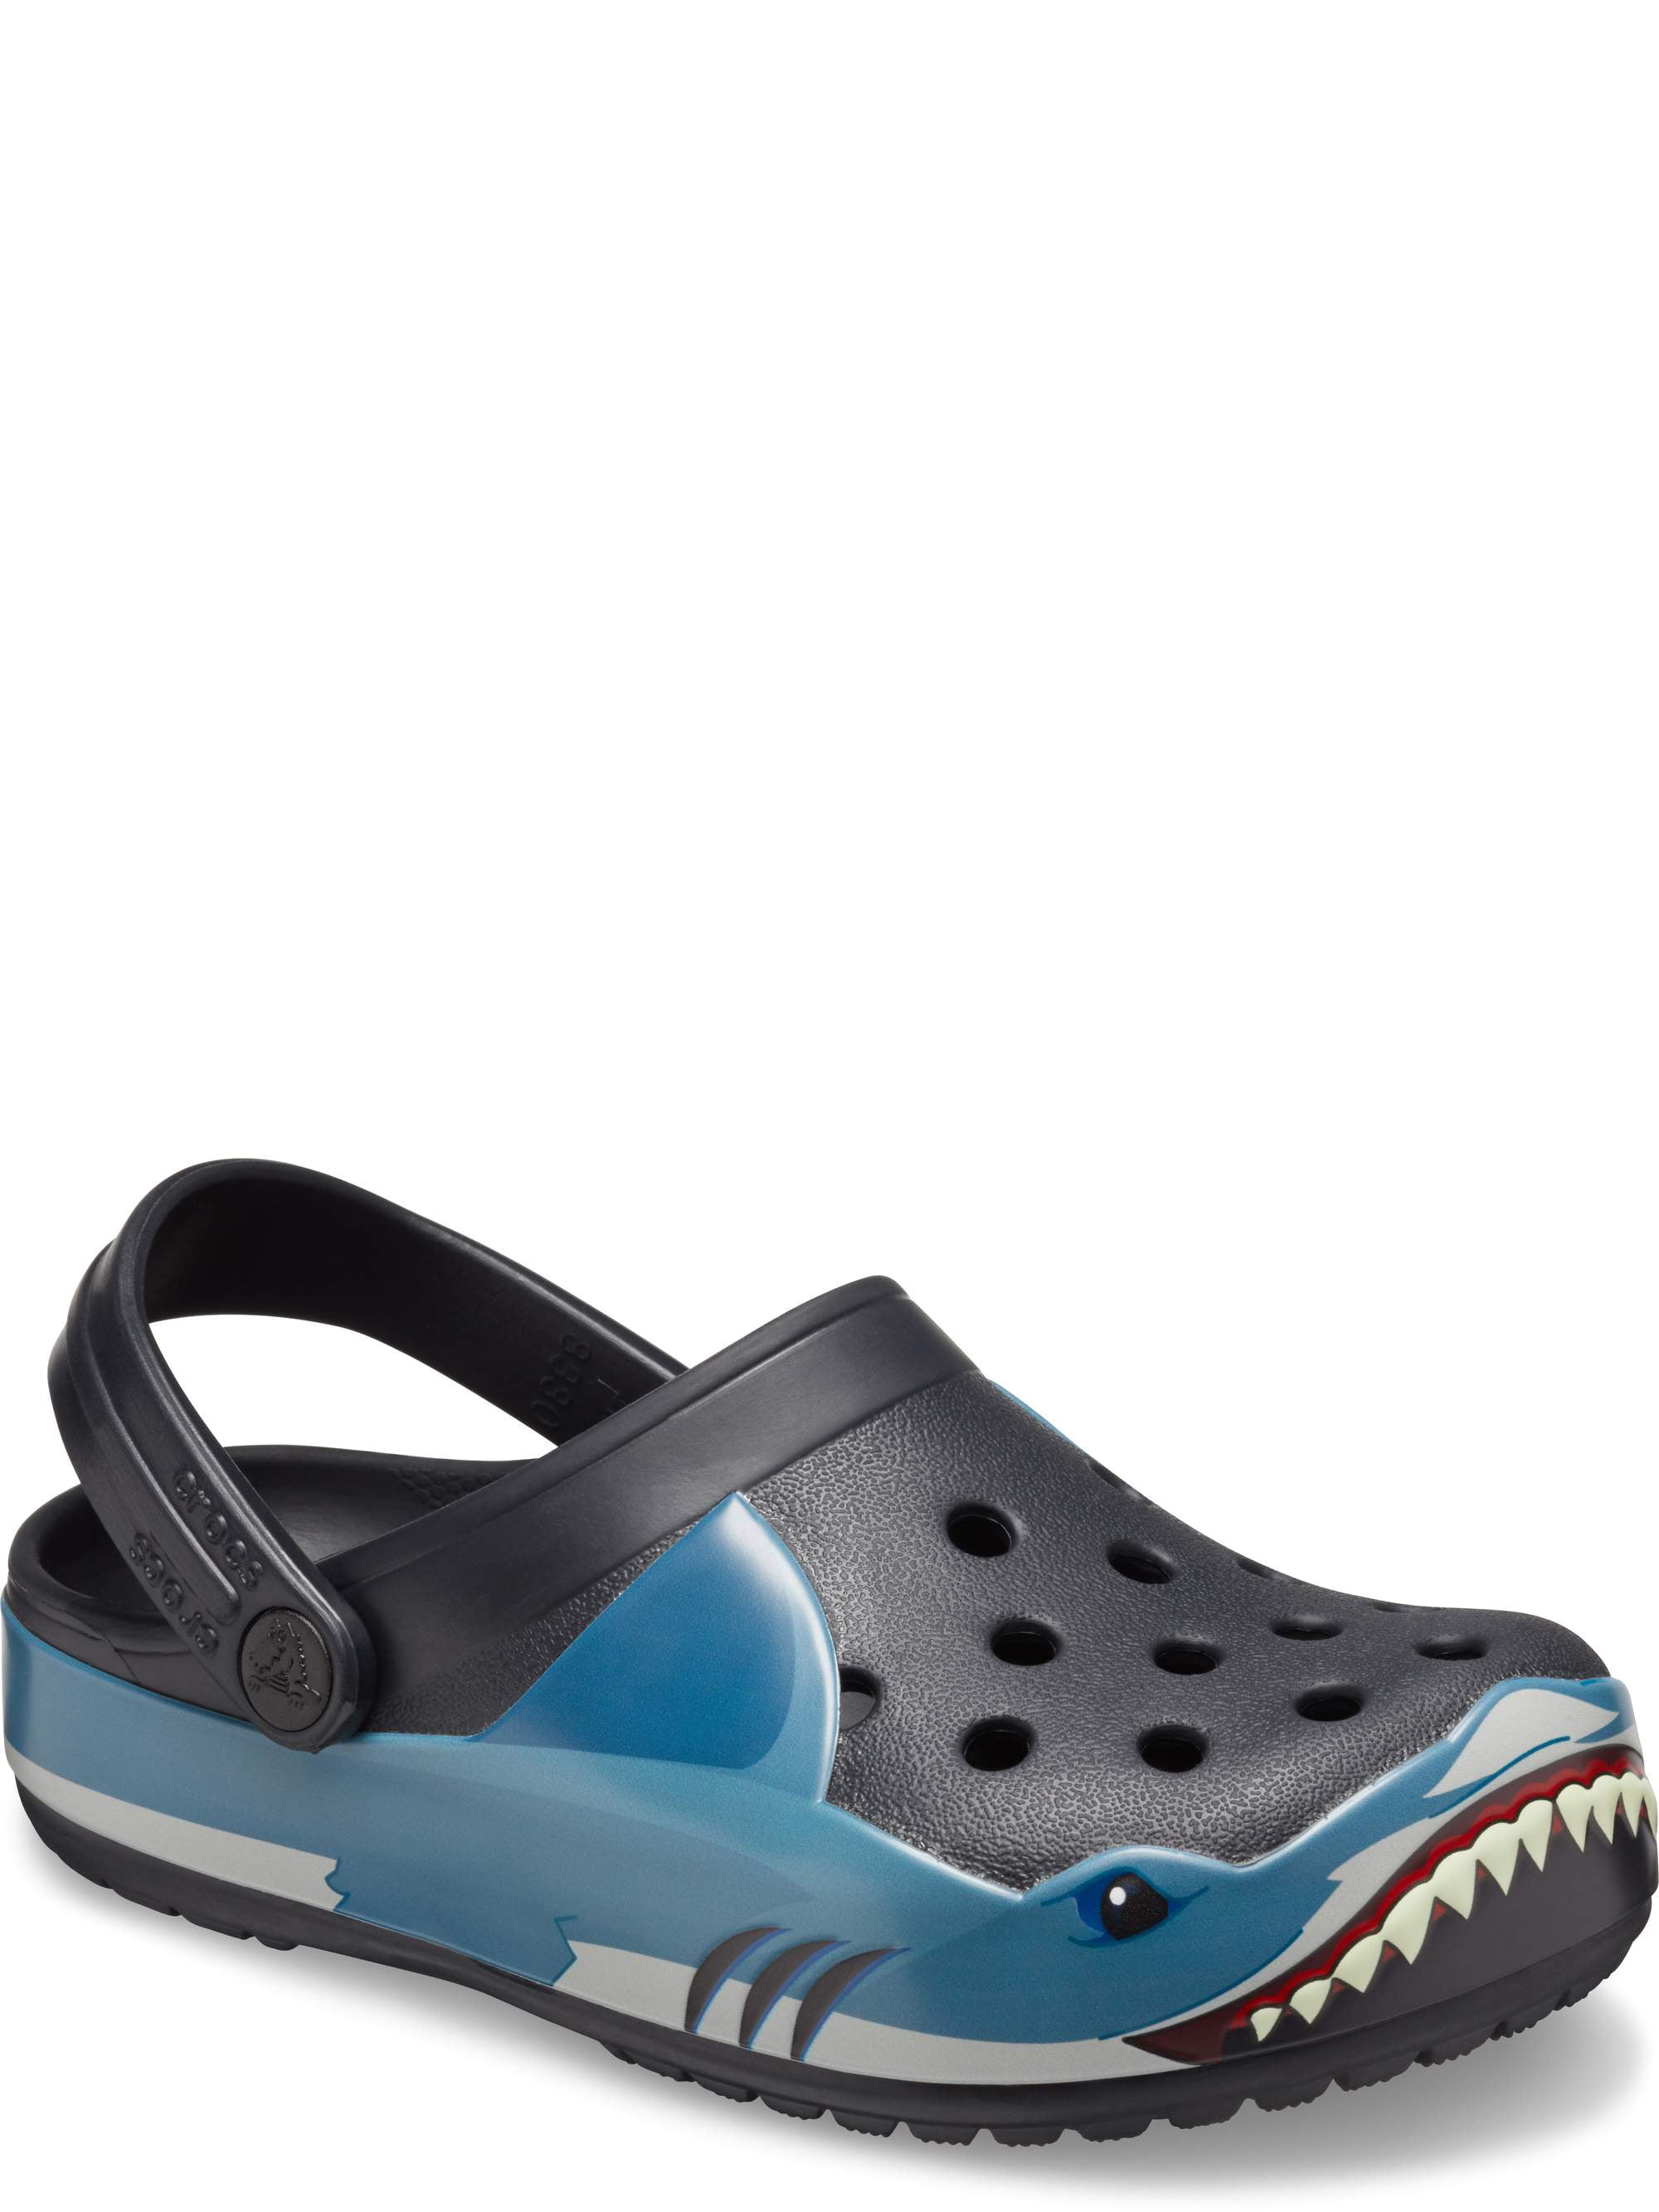 crocs with sharks